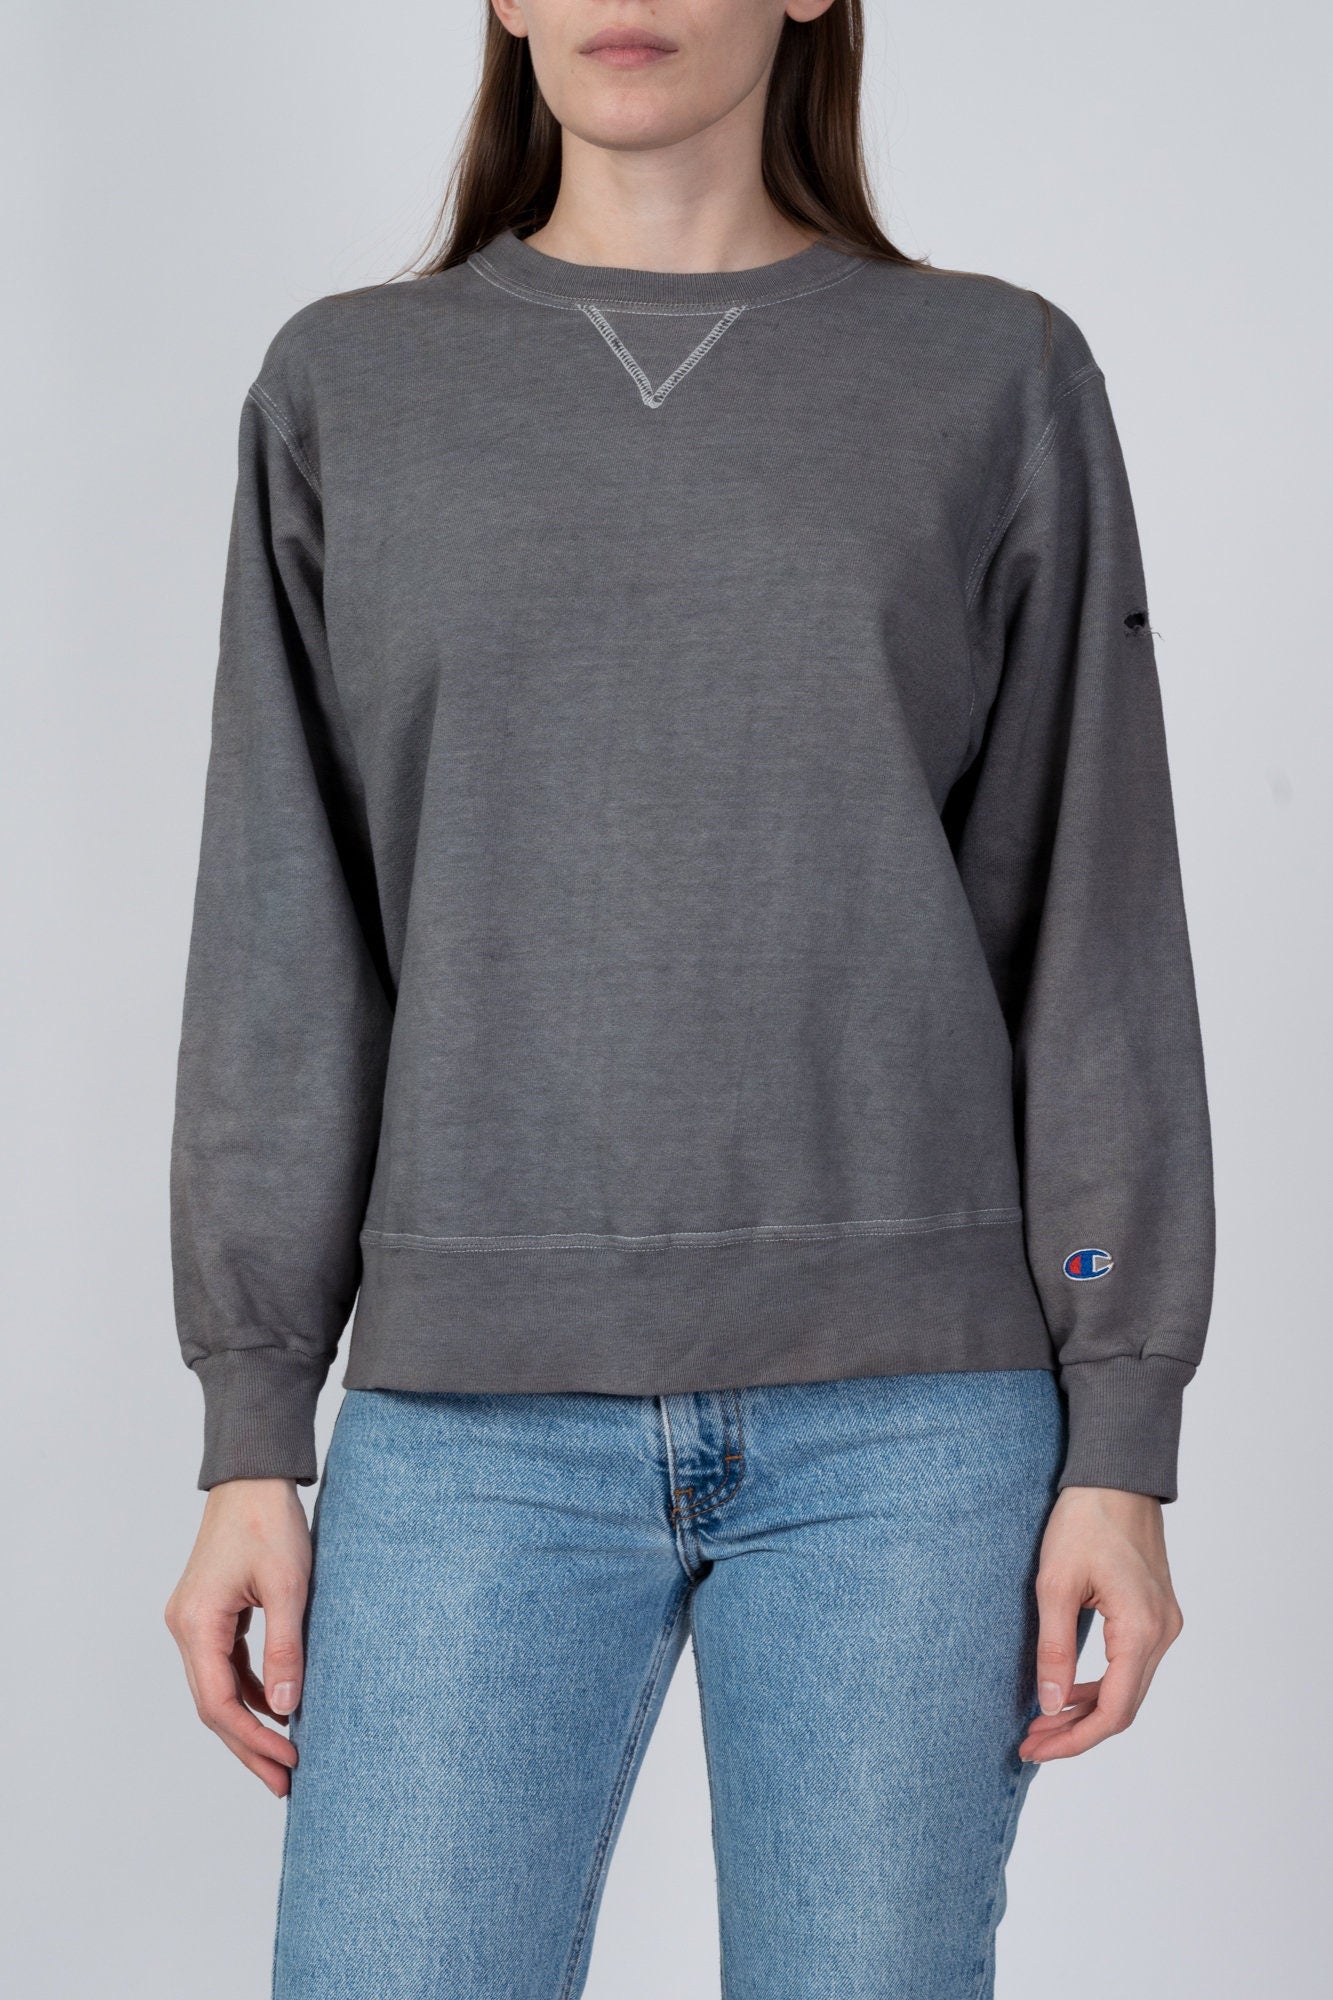 Vintage Champion V Stitch Distressed Sweatshirt - Men's Small